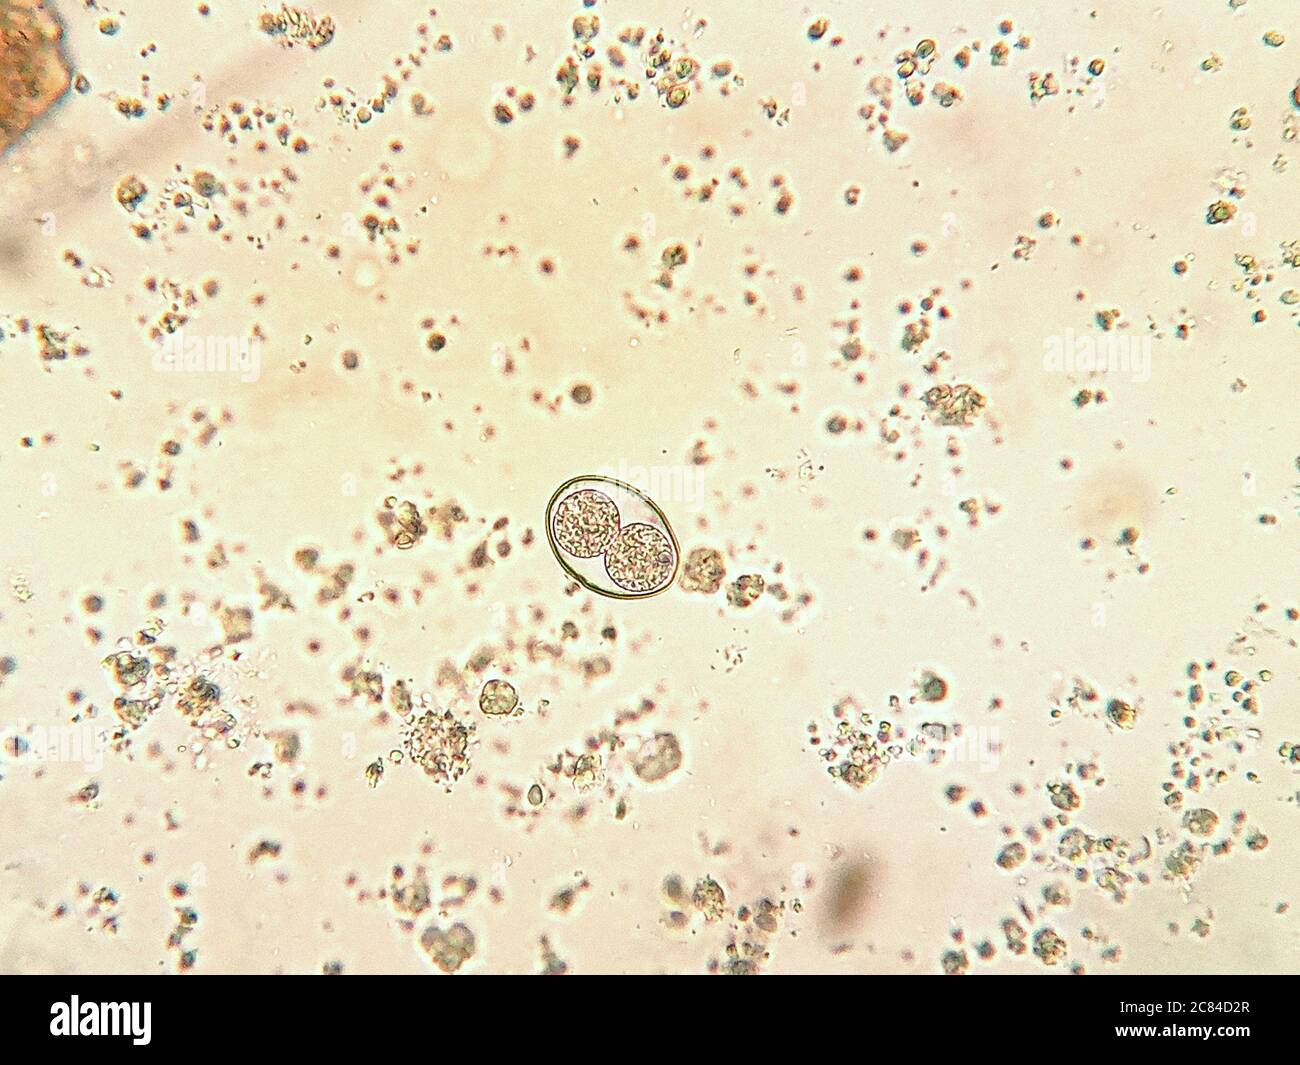 isospora spp oocyst under the microscope Stock Photo